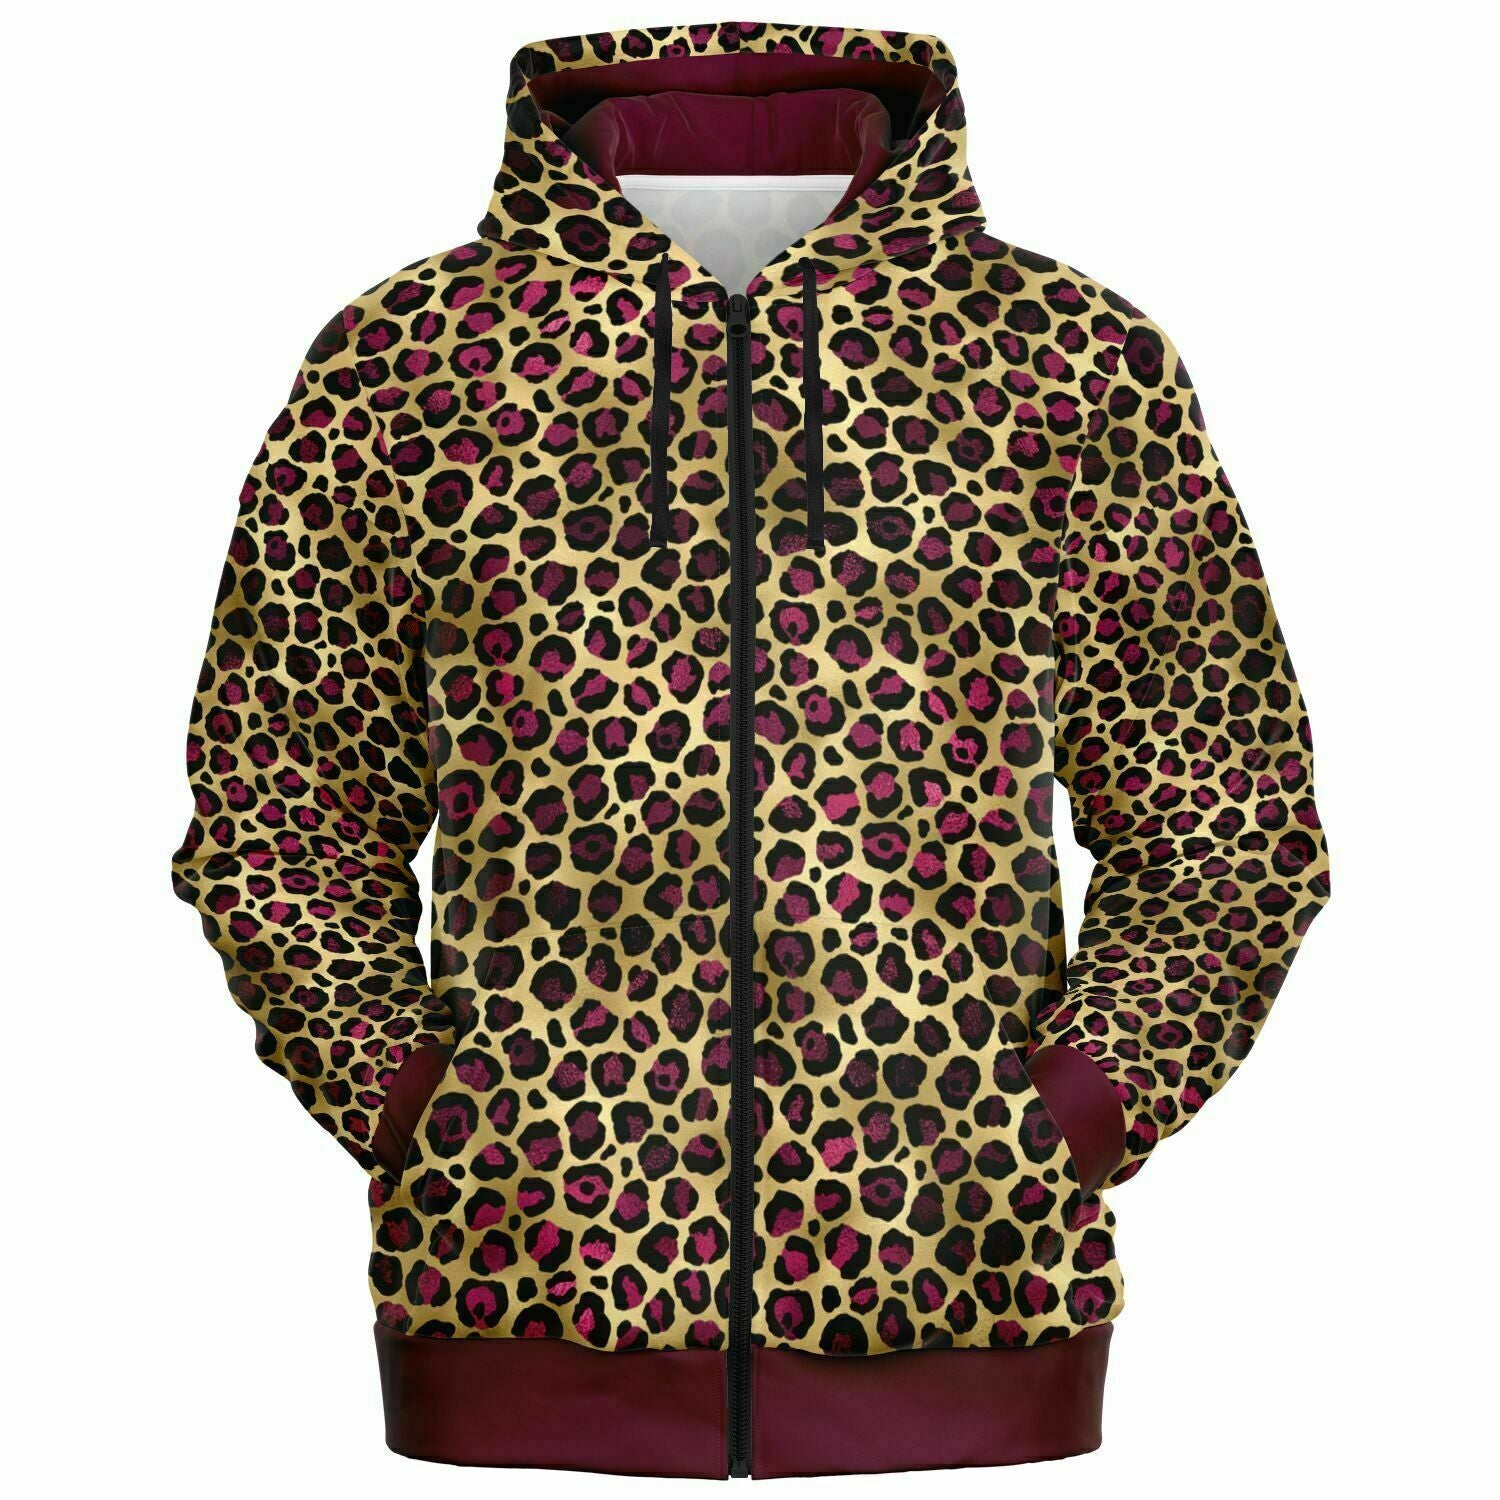 Leopard Luxe Zip Hoodie in Claret Contrast, Rockabilly, Rave, Plus Size Hoodie